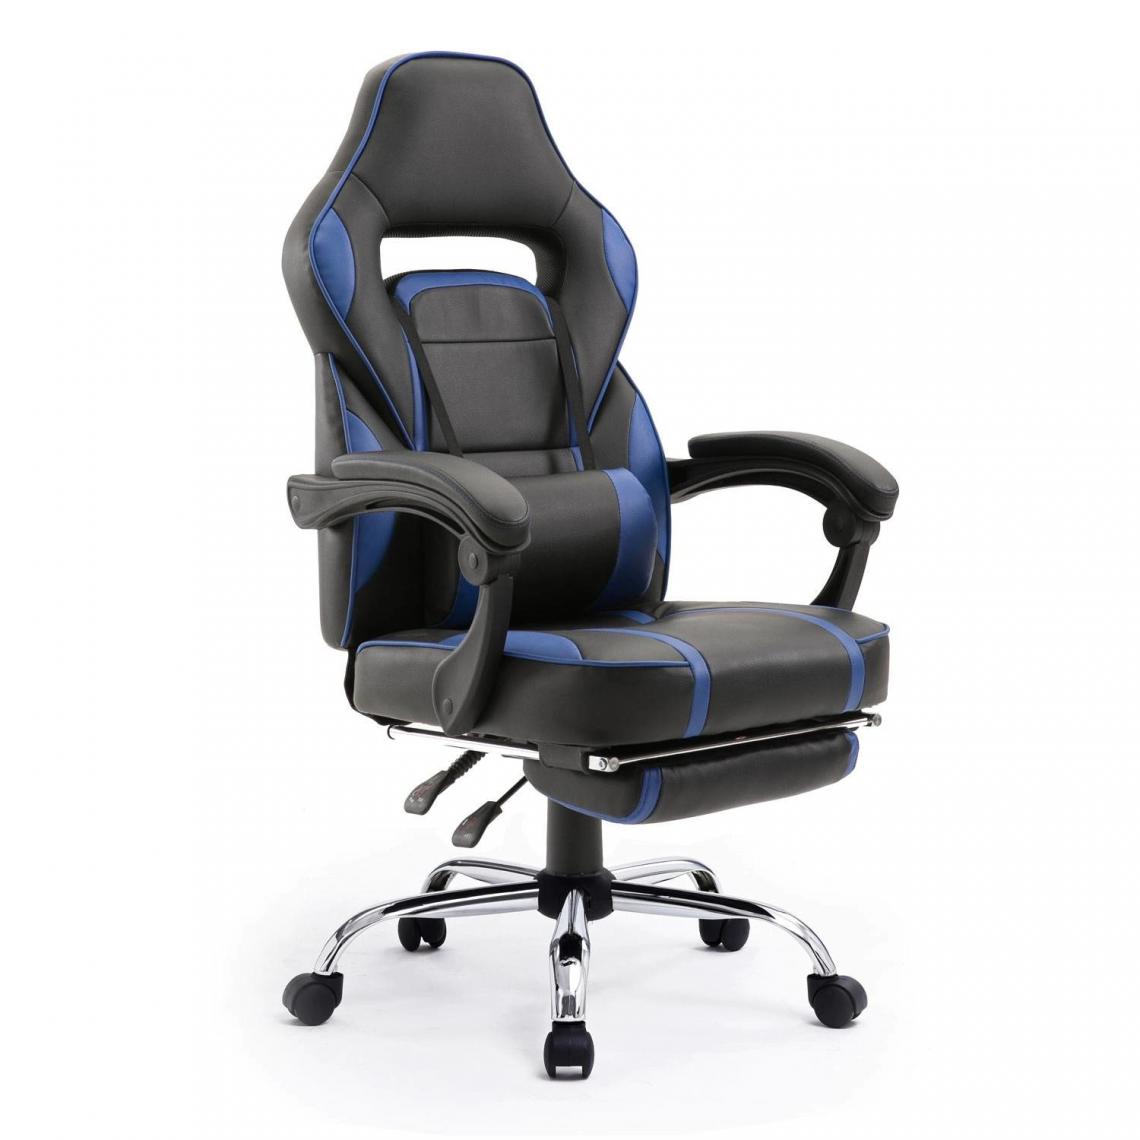 Beneffito - GHOST - Fauteuil de bureau GAMER inclinable avec repose-pieds - Bleu - Chaise gamer